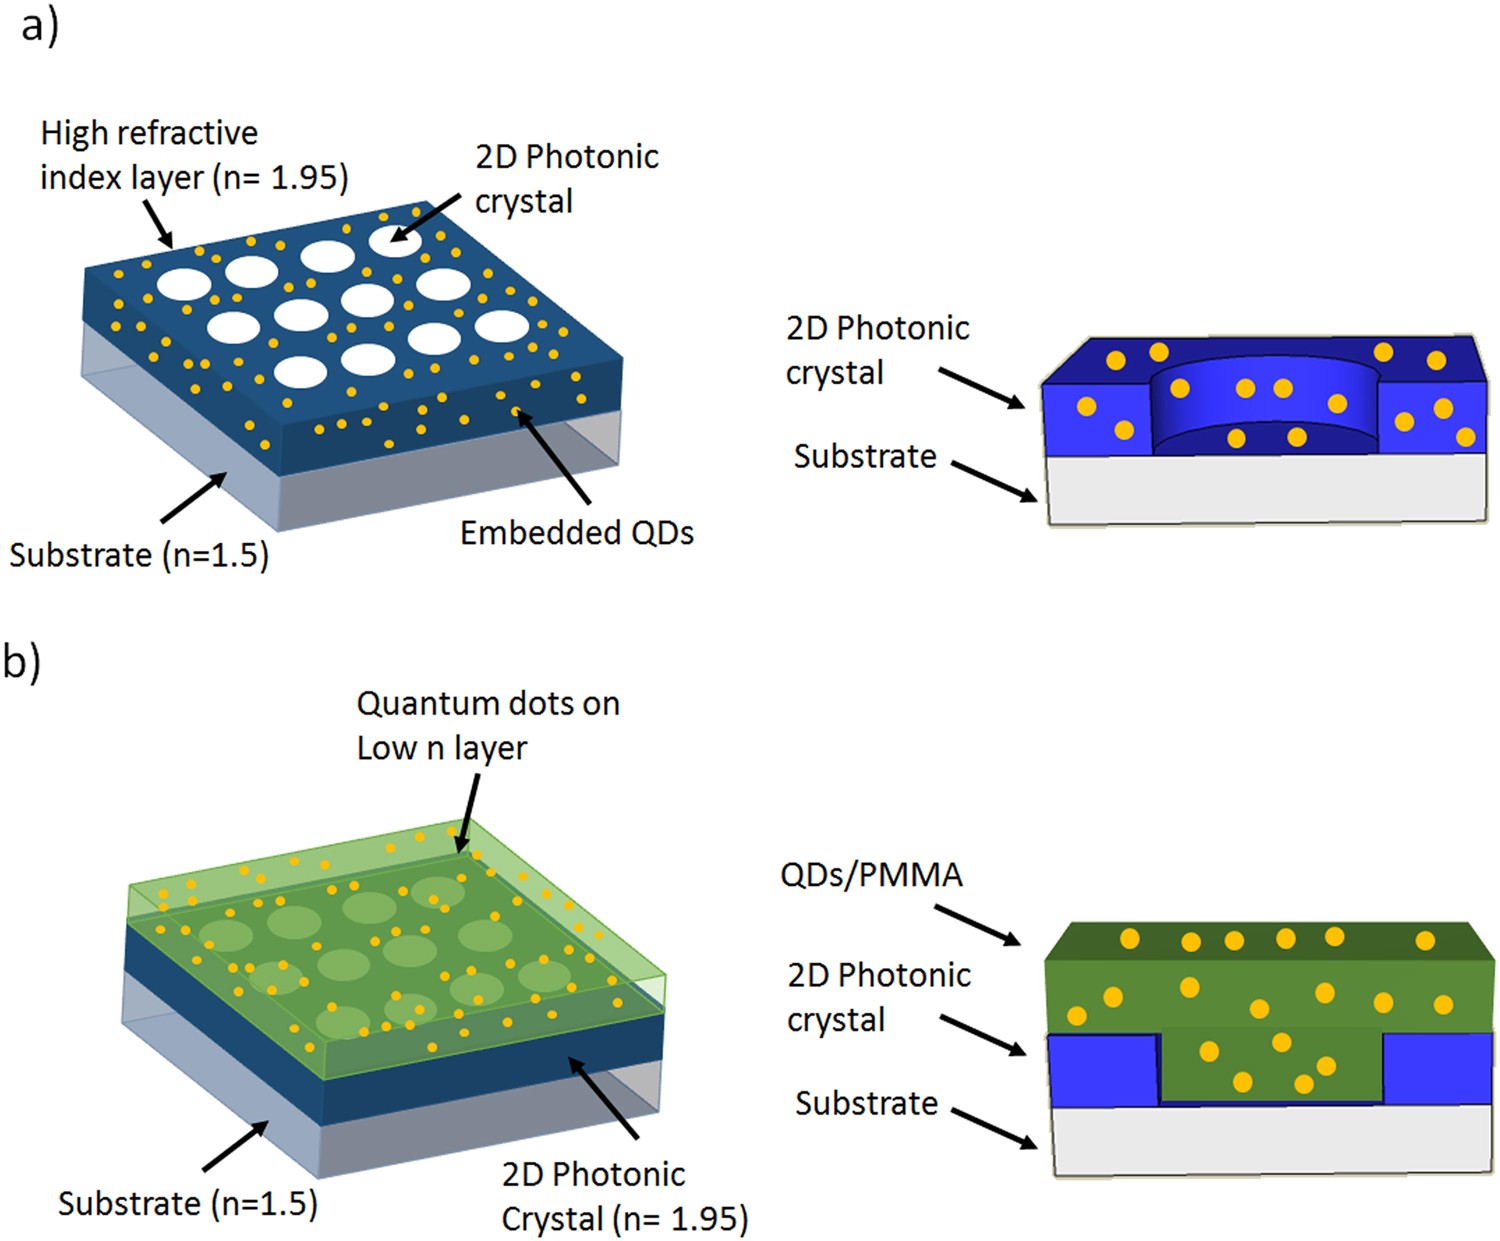 Transparent Displays Utilizing Nanopatterned Quantum Dot Films